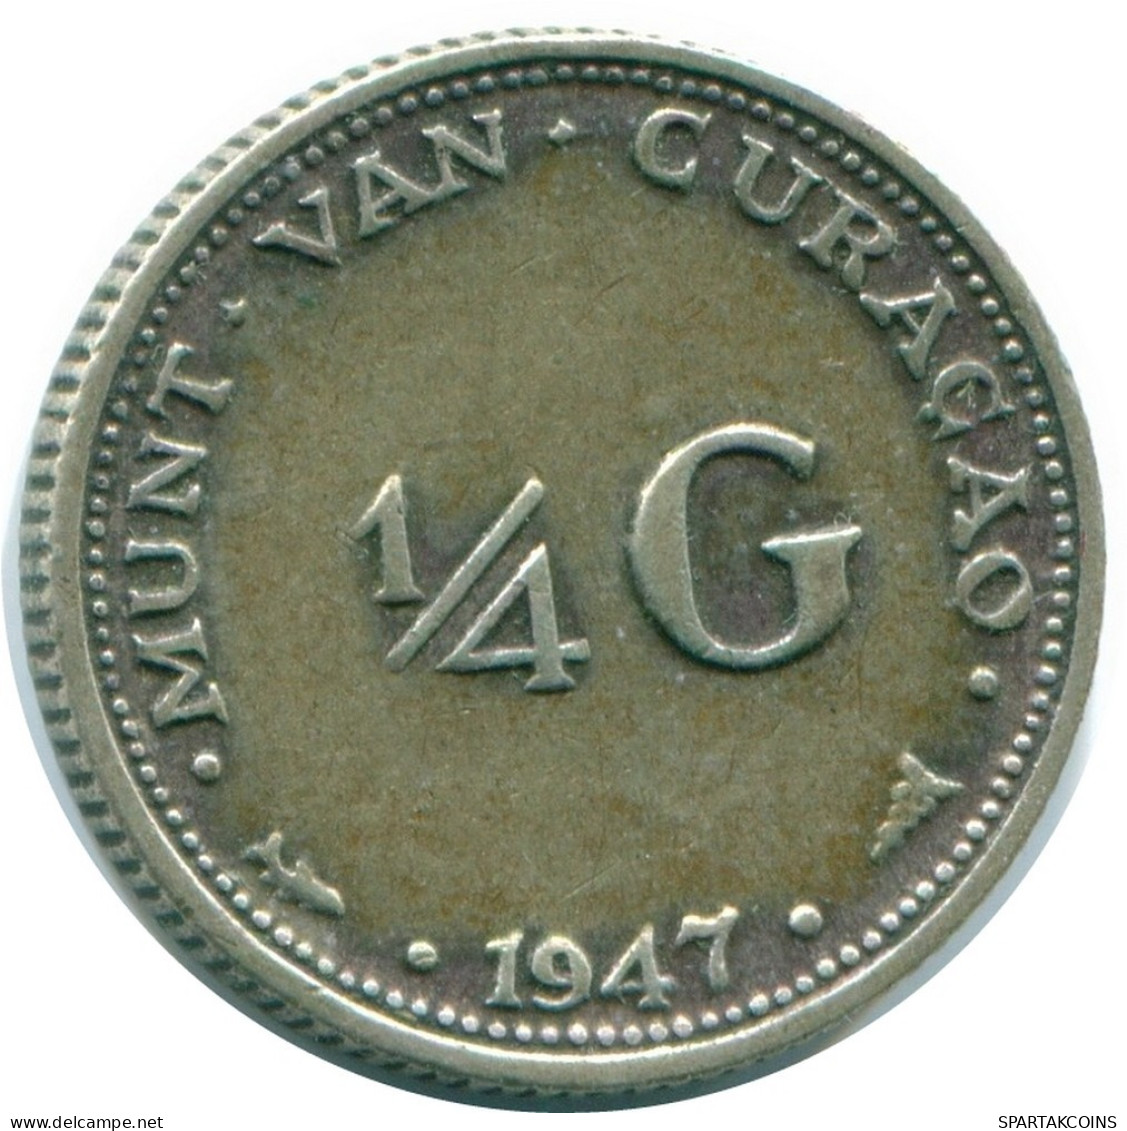 1/4 GULDEN 1947 CURACAO Netherlands SILVER Colonial Coin #NL10787.4.U.A - Curacao